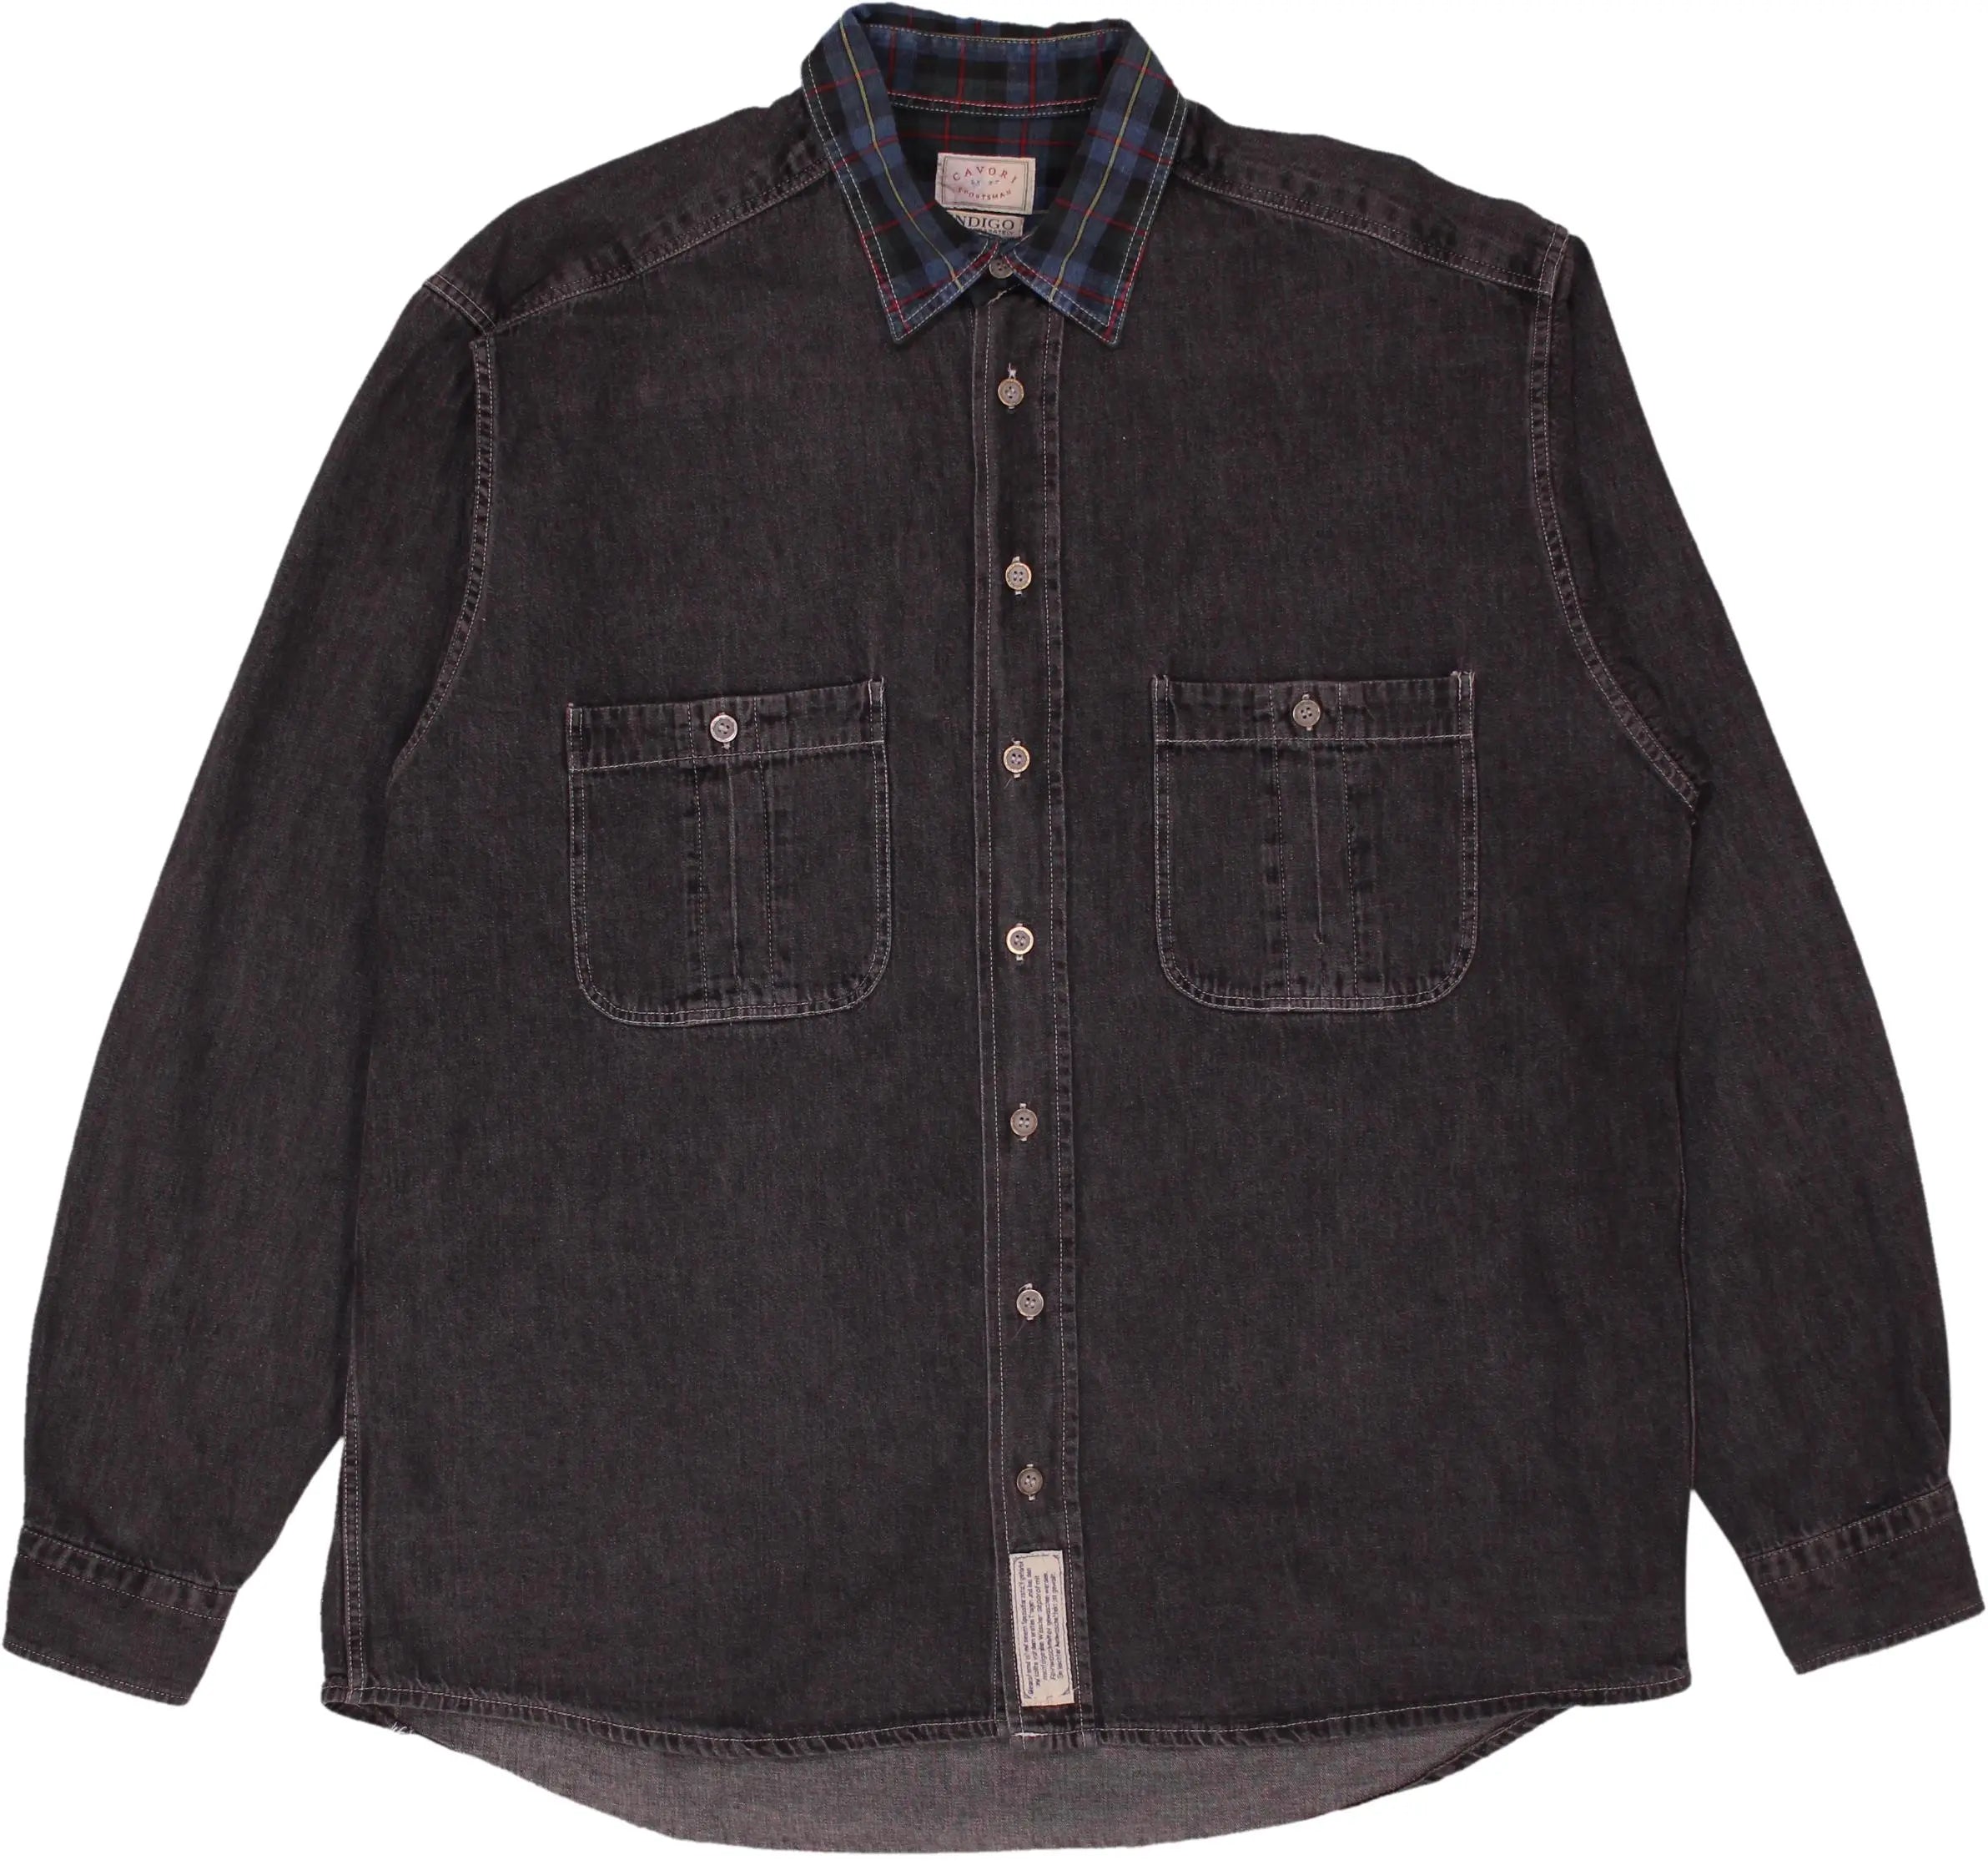 Cavori - Vintage Denim Shirt- ThriftTale.com - Vintage and second handclothing